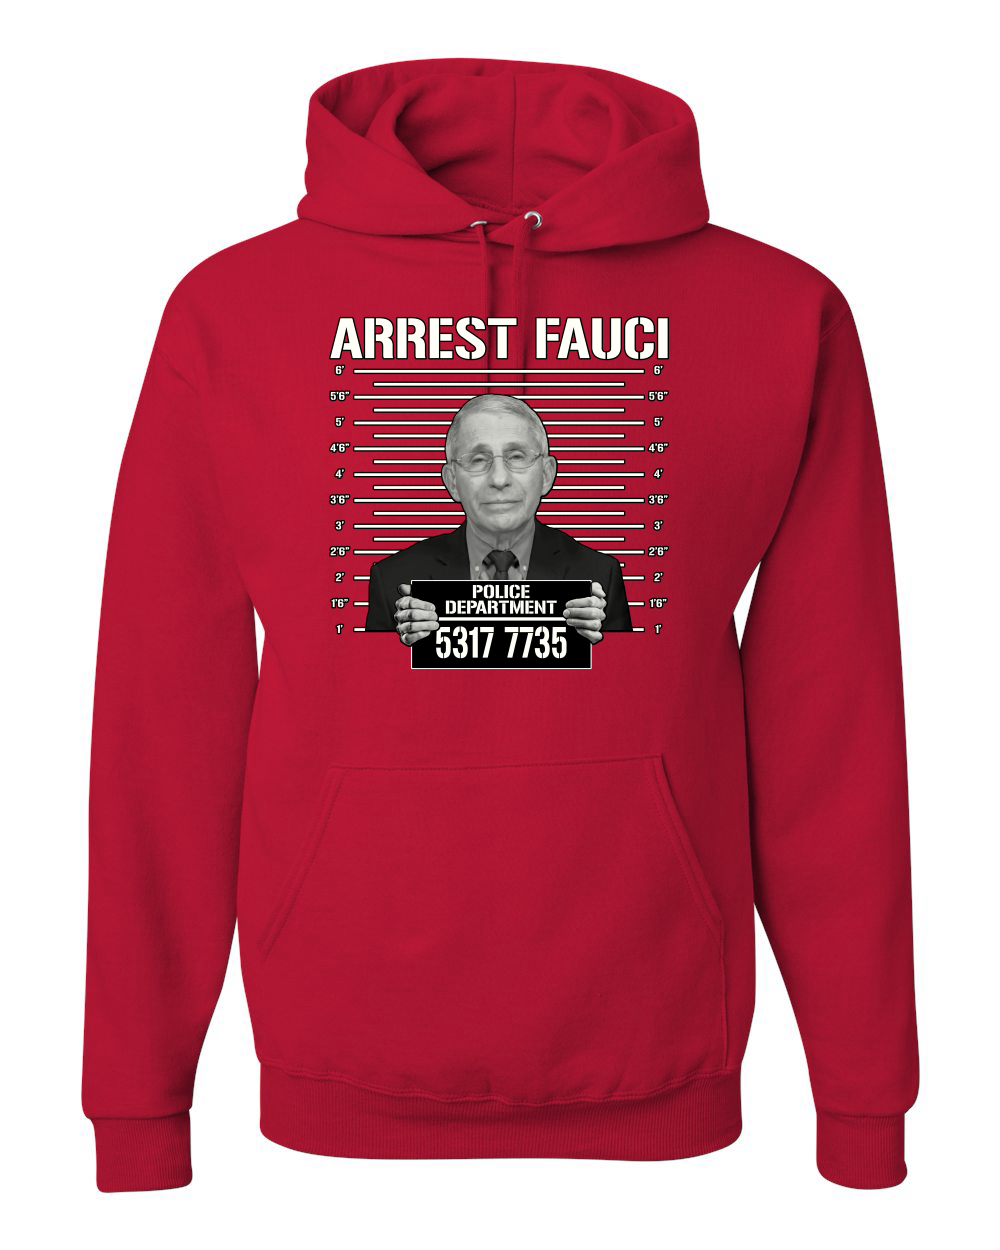 thumbnail 15  - Arrest Fauci Mugshot Political Unisex Graphic Hooded Sweatshirt